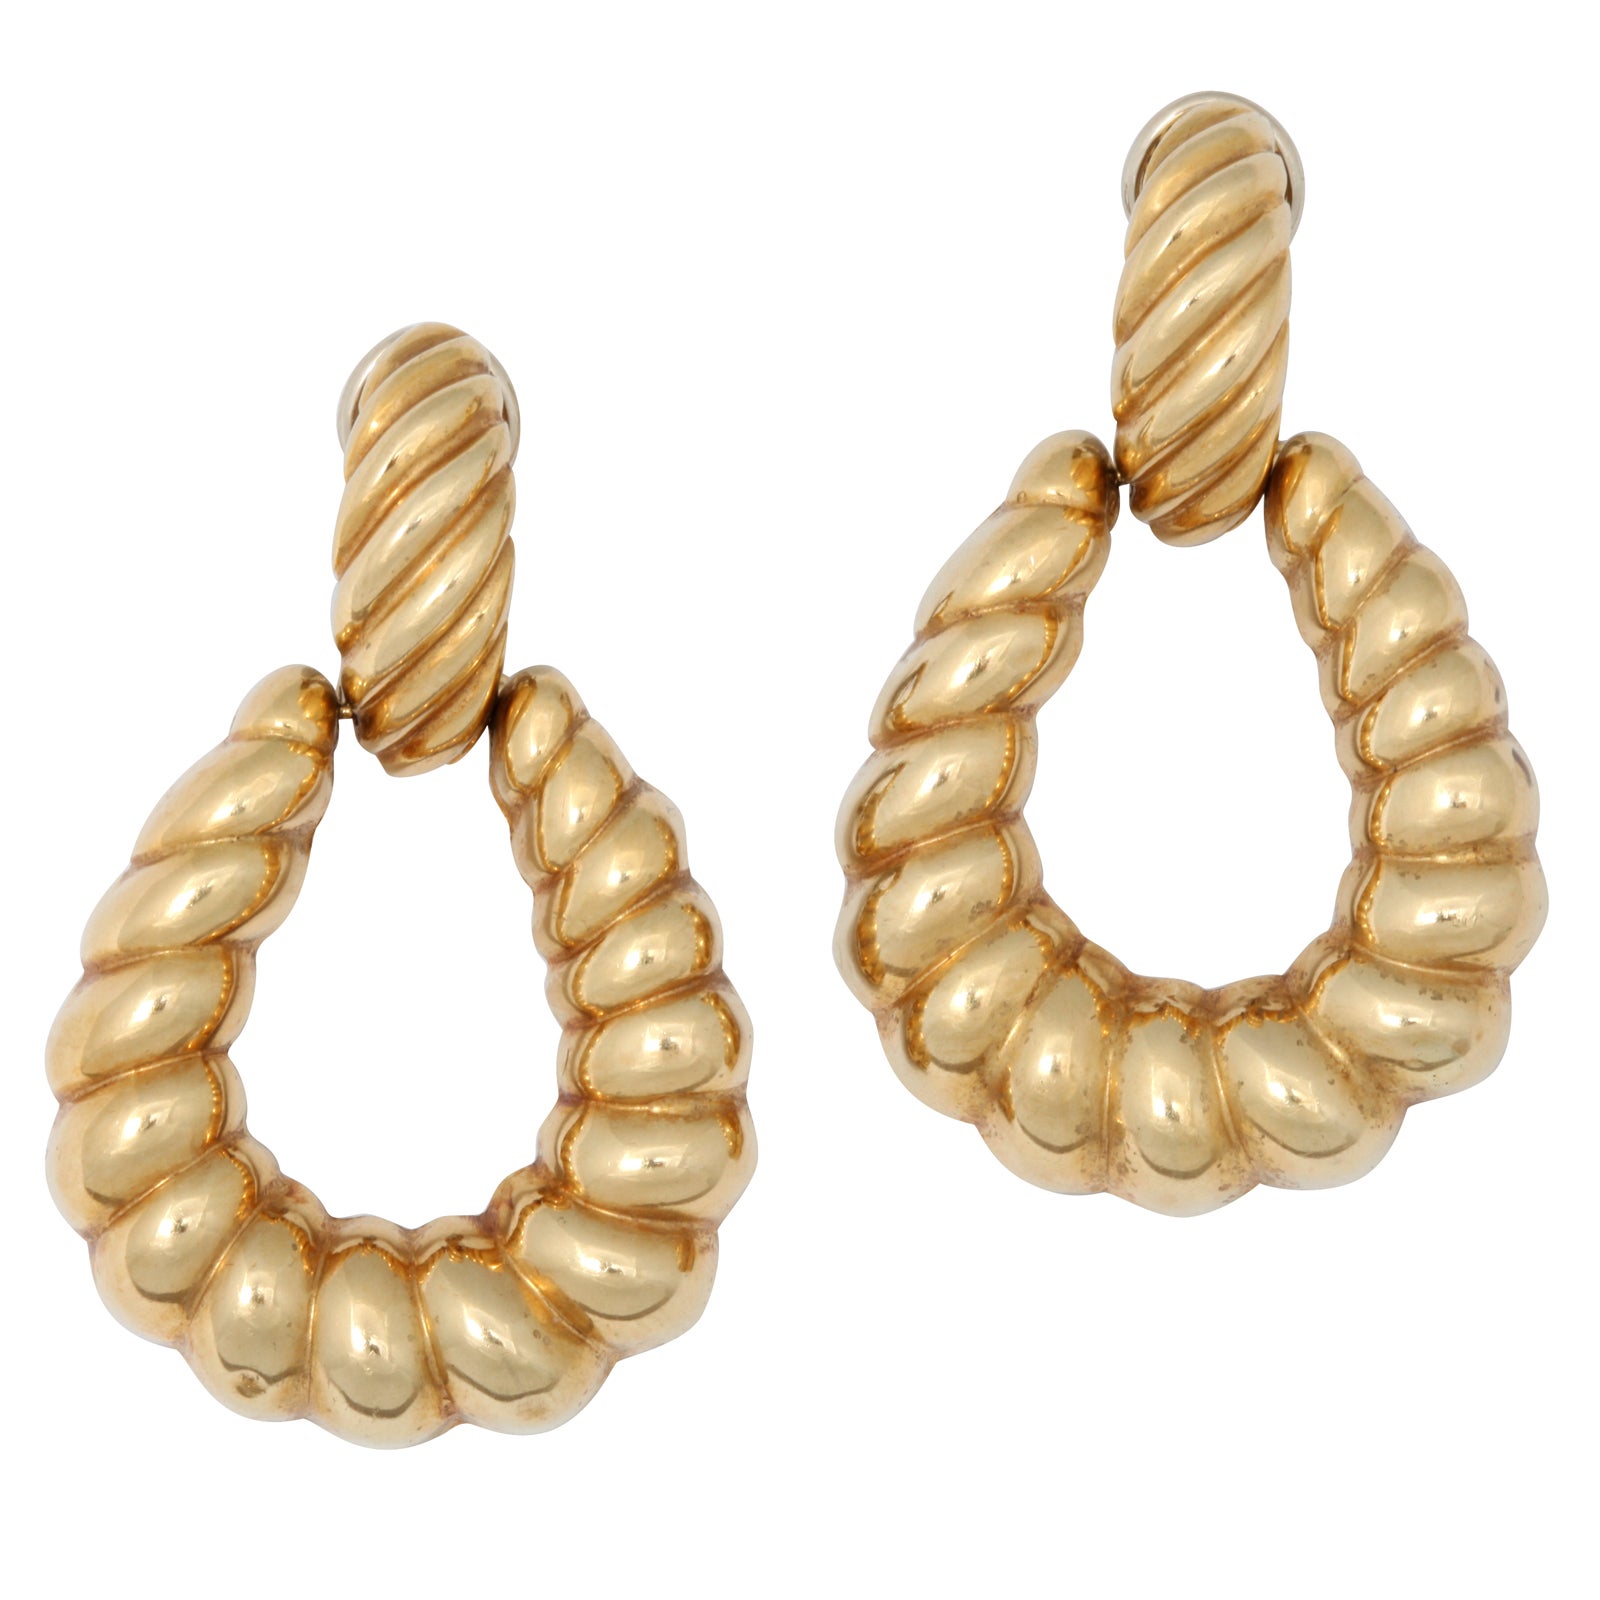 Textured Gold Large Doorknocker Earrings